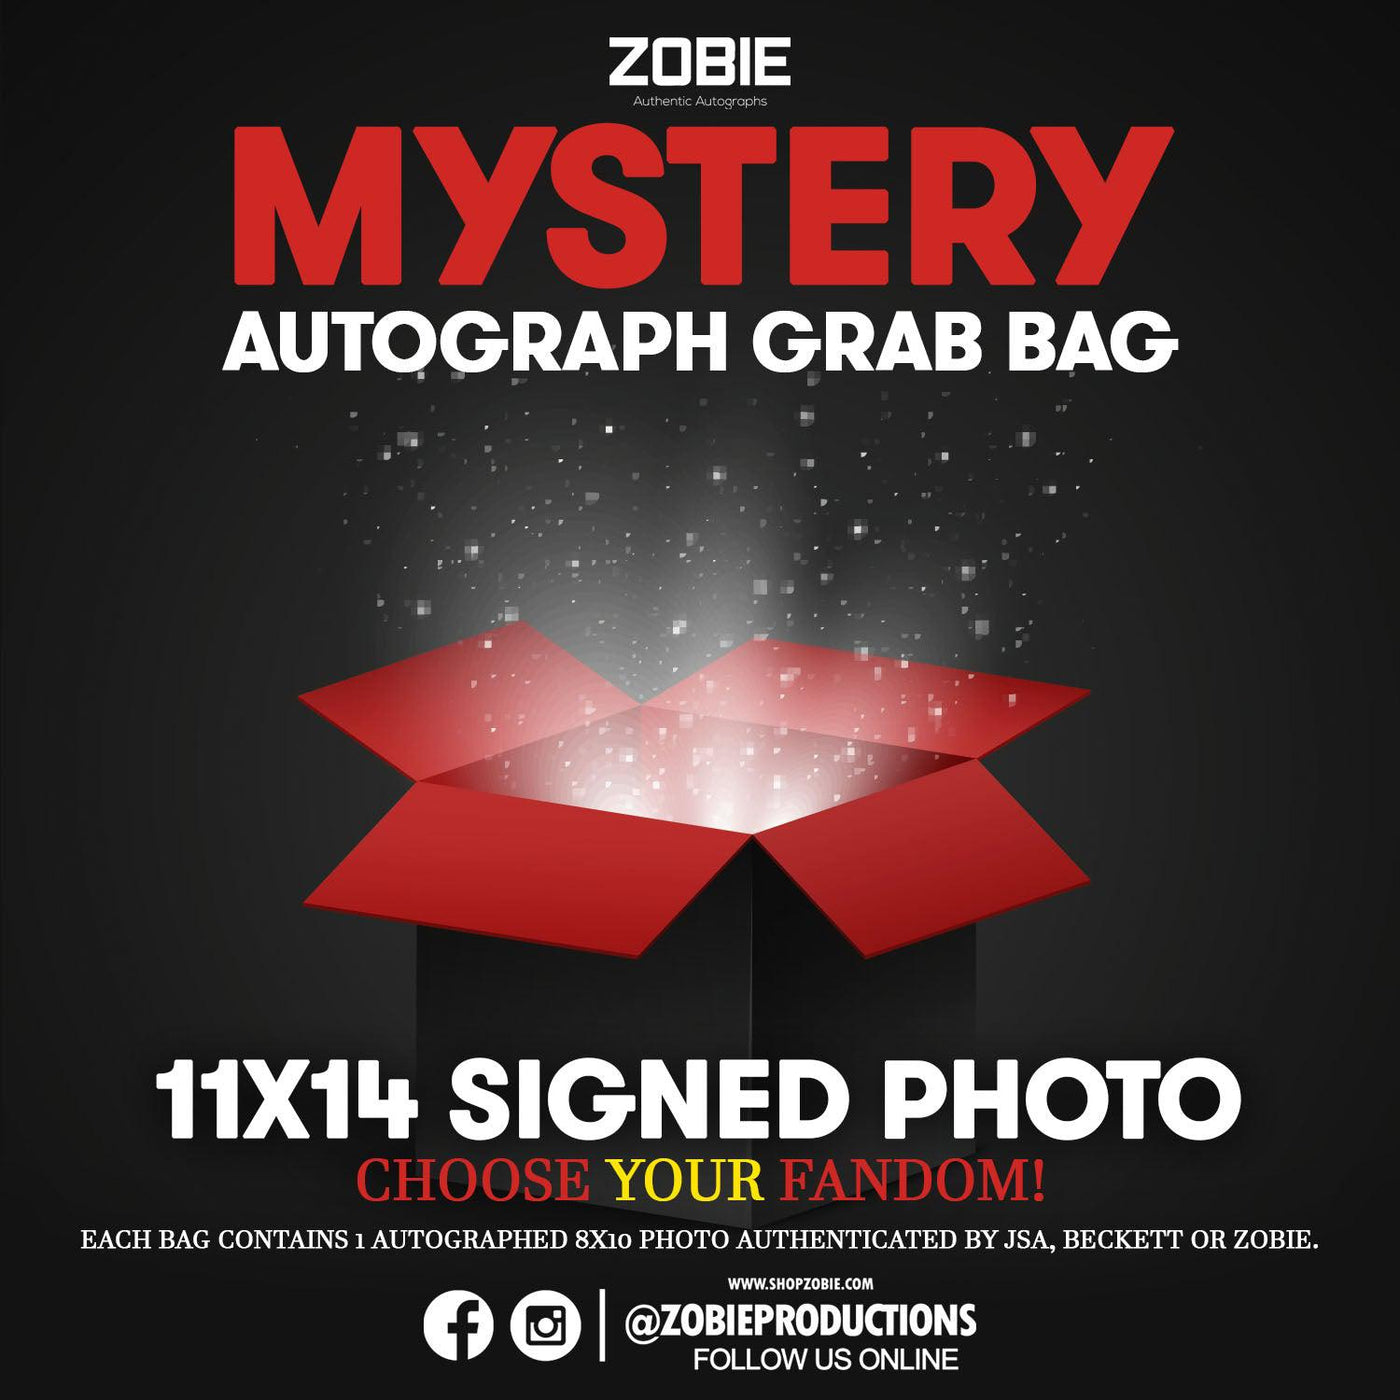 Zobie Mystery Autograph Grab Bag - 11x14 Photo